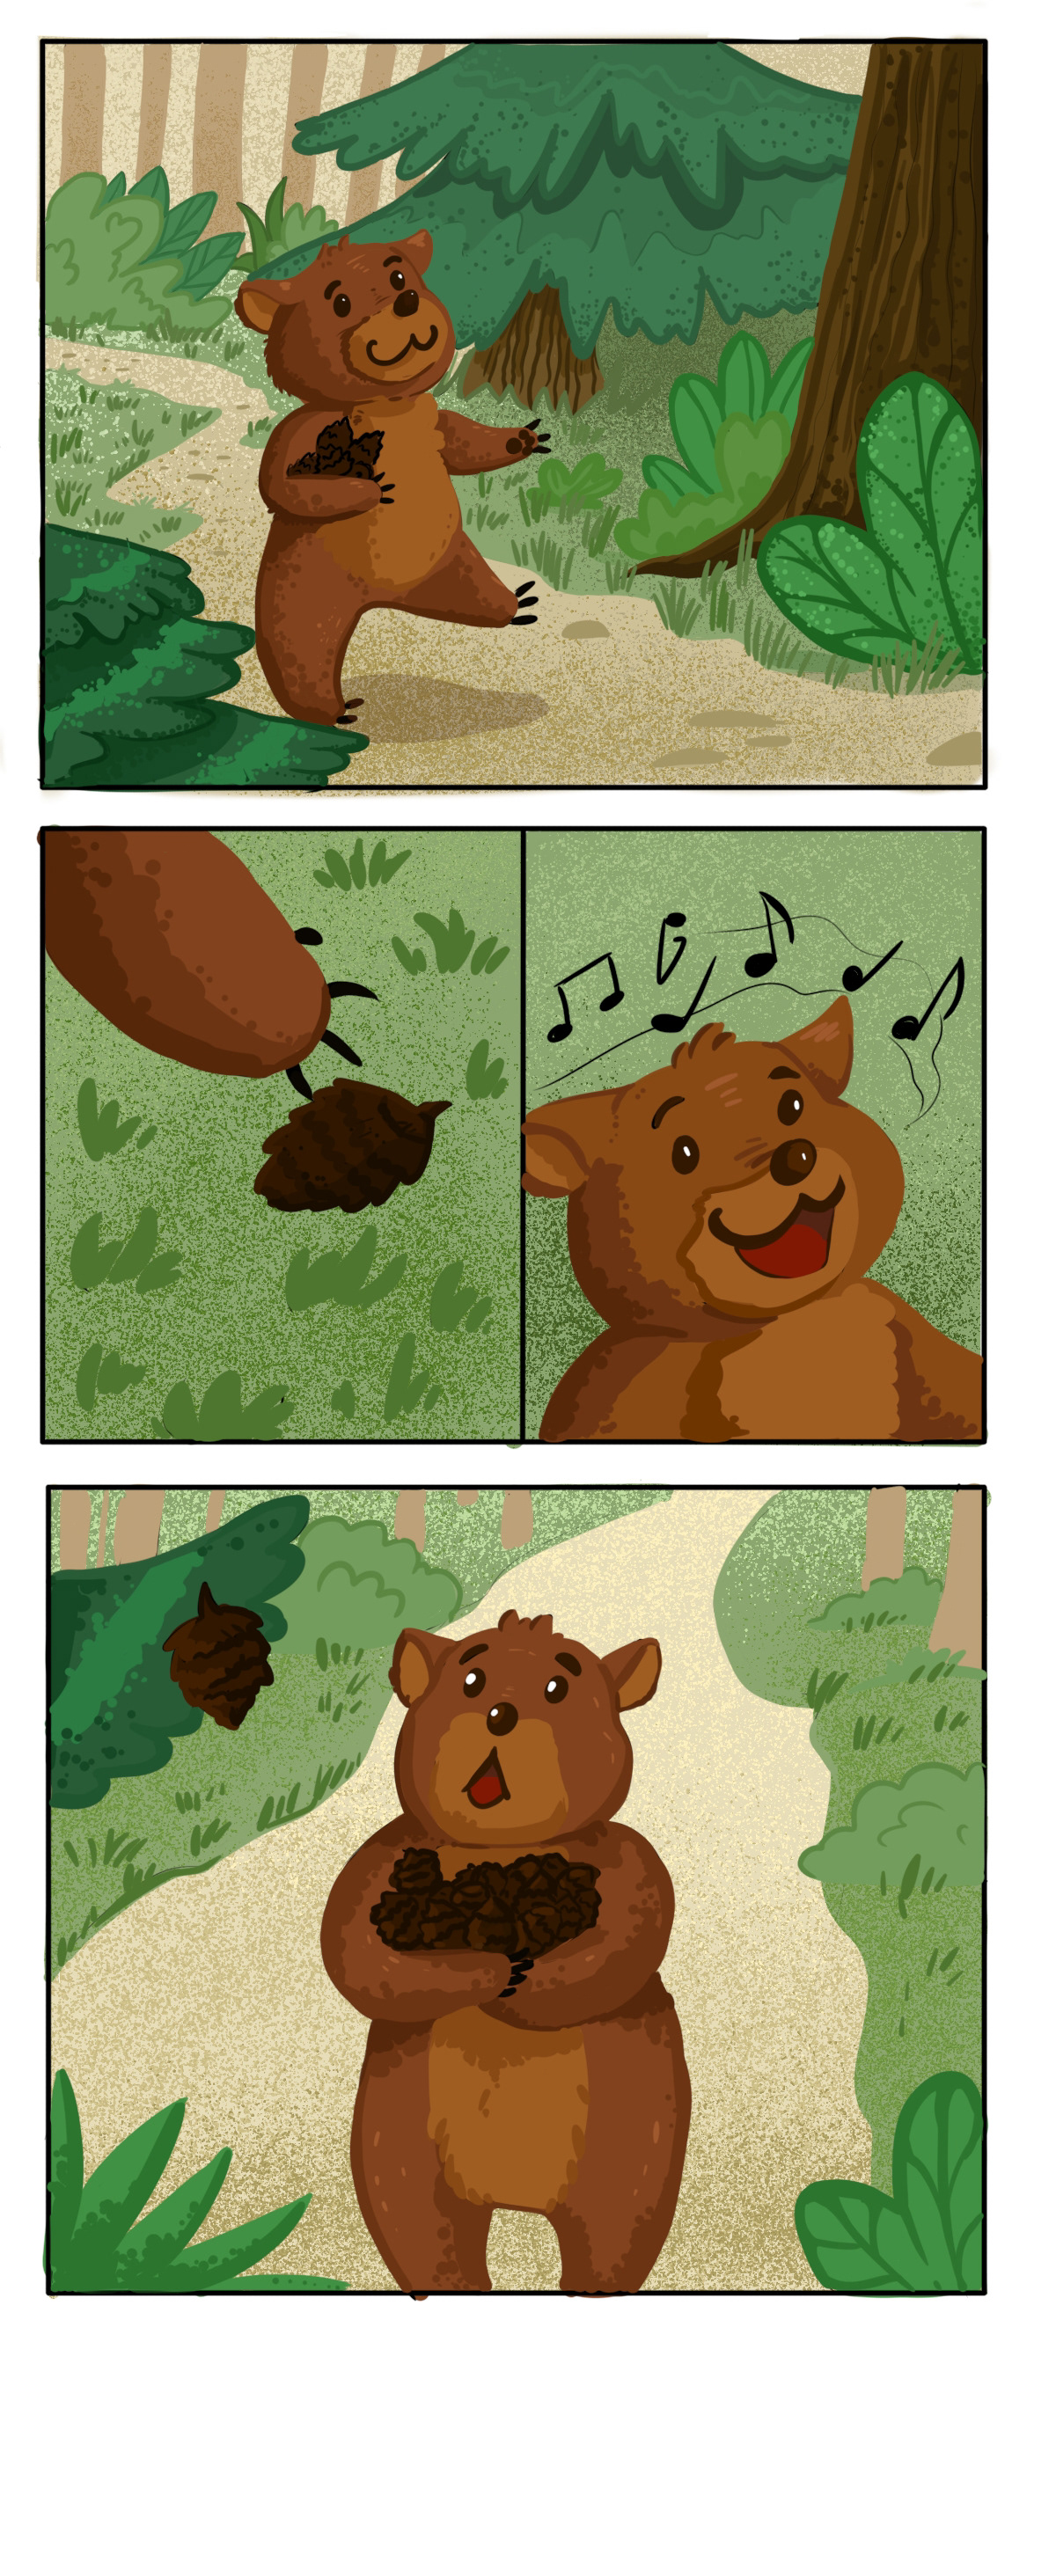 мишка арт медведь иллюстрация картинка Шишка сказка комикс лес графика раскраска история зверушки животное Книжка эмоции